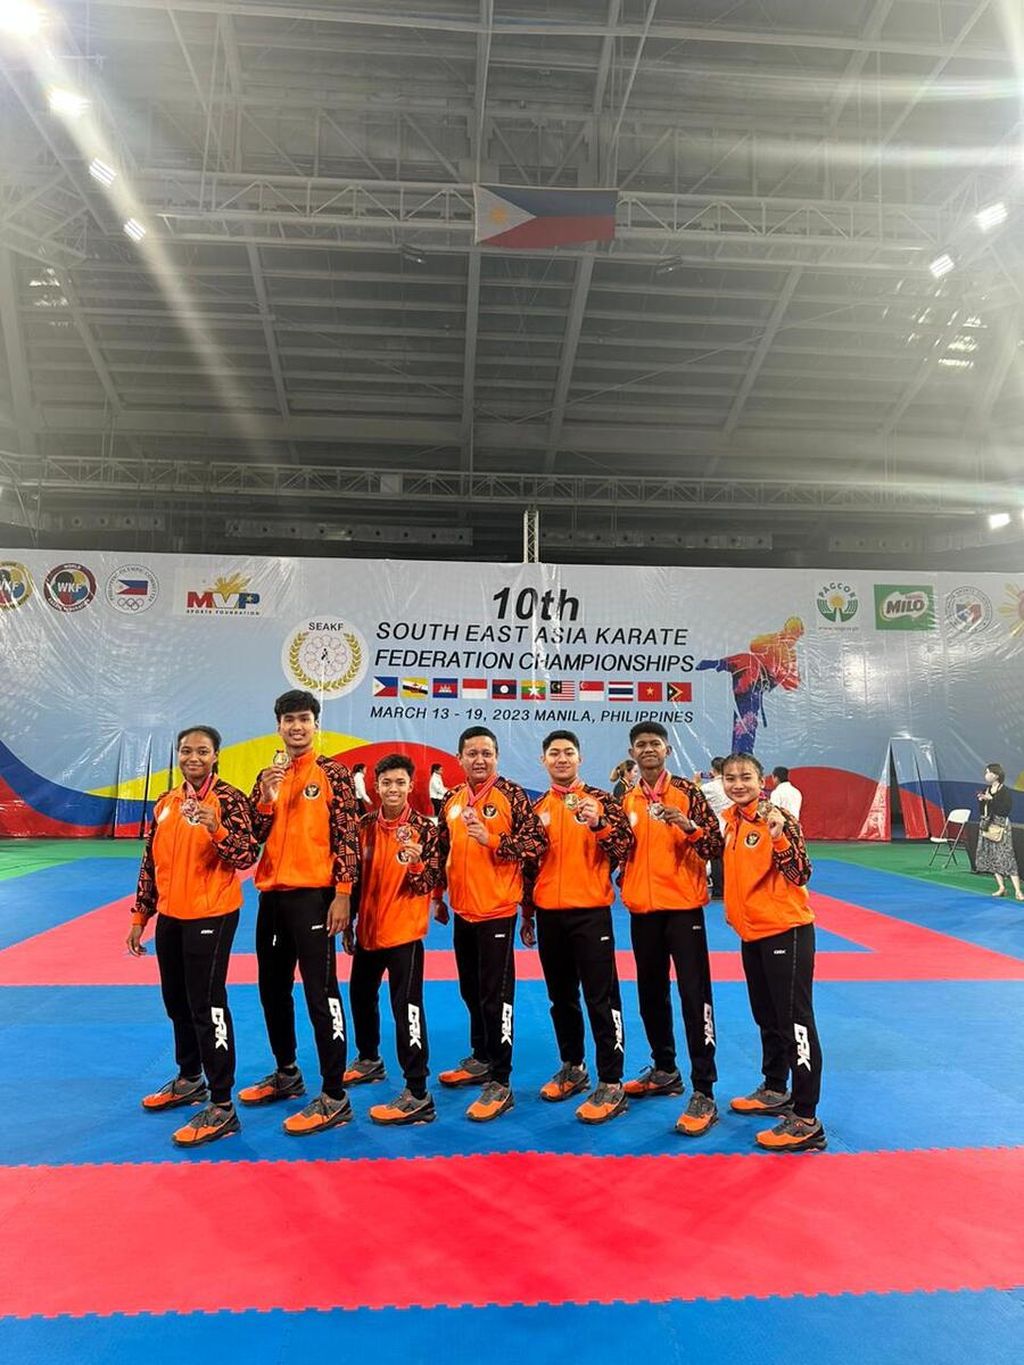 Beberapa atlet karate Indonesia berpose setelah mendapatkan medali pada Kejuaraan Federasi Karate Asia Tenggara atau SEAKF ke-10 di Manila, Filipina, Jumat (17/3/2023). 